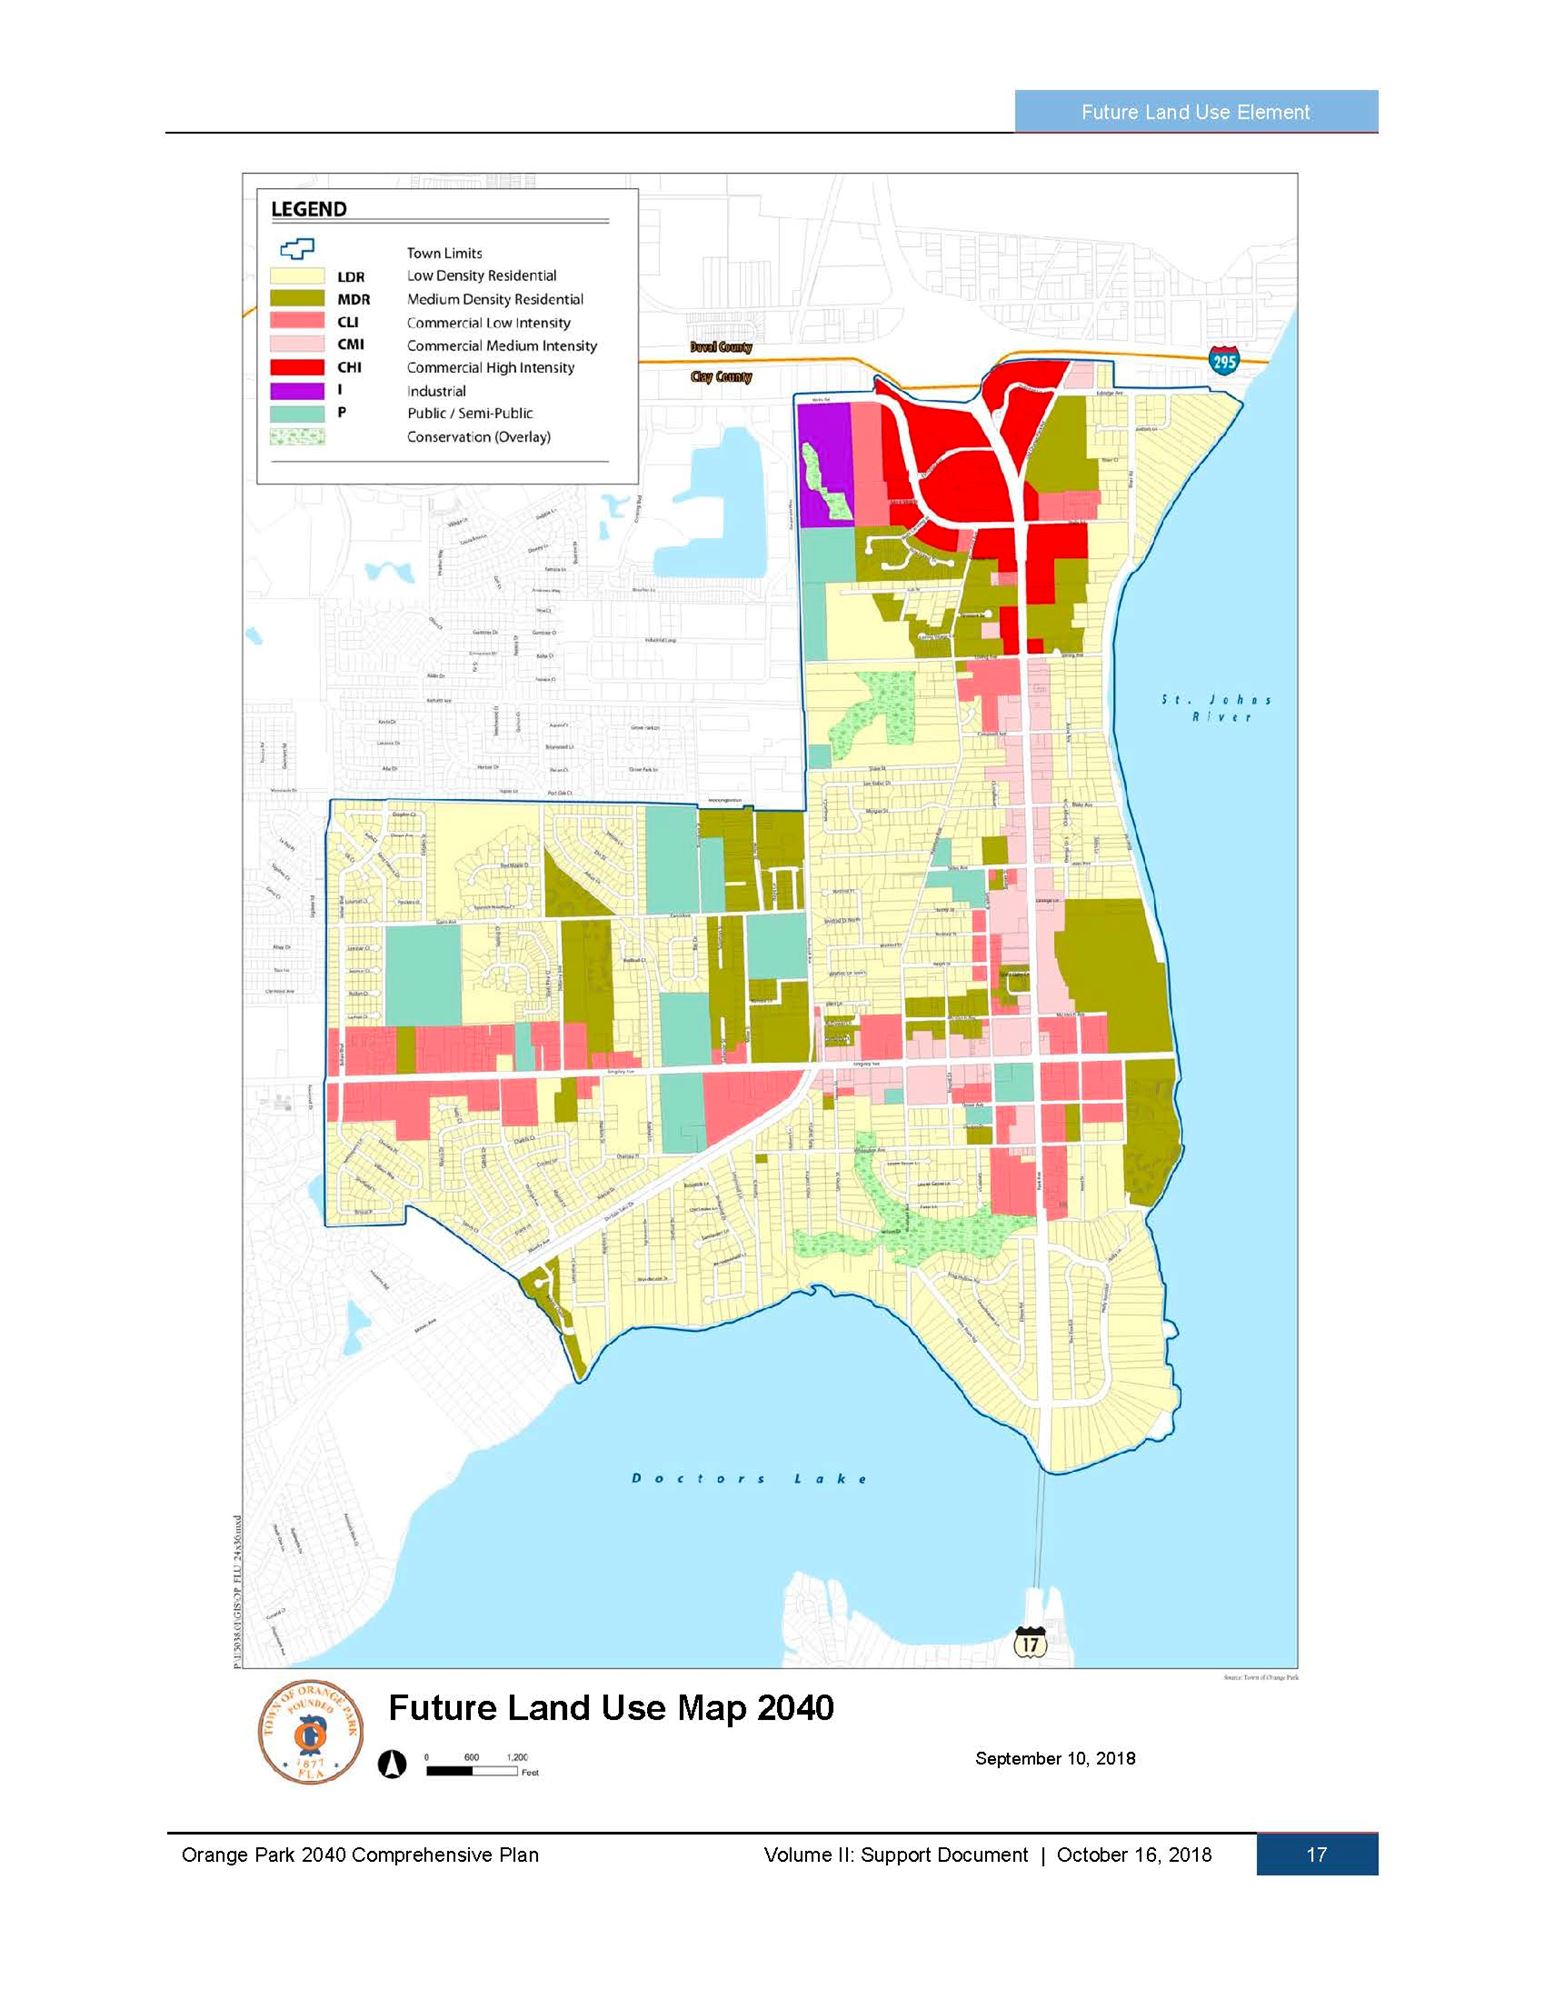 Future Land Use Map (FLUM)